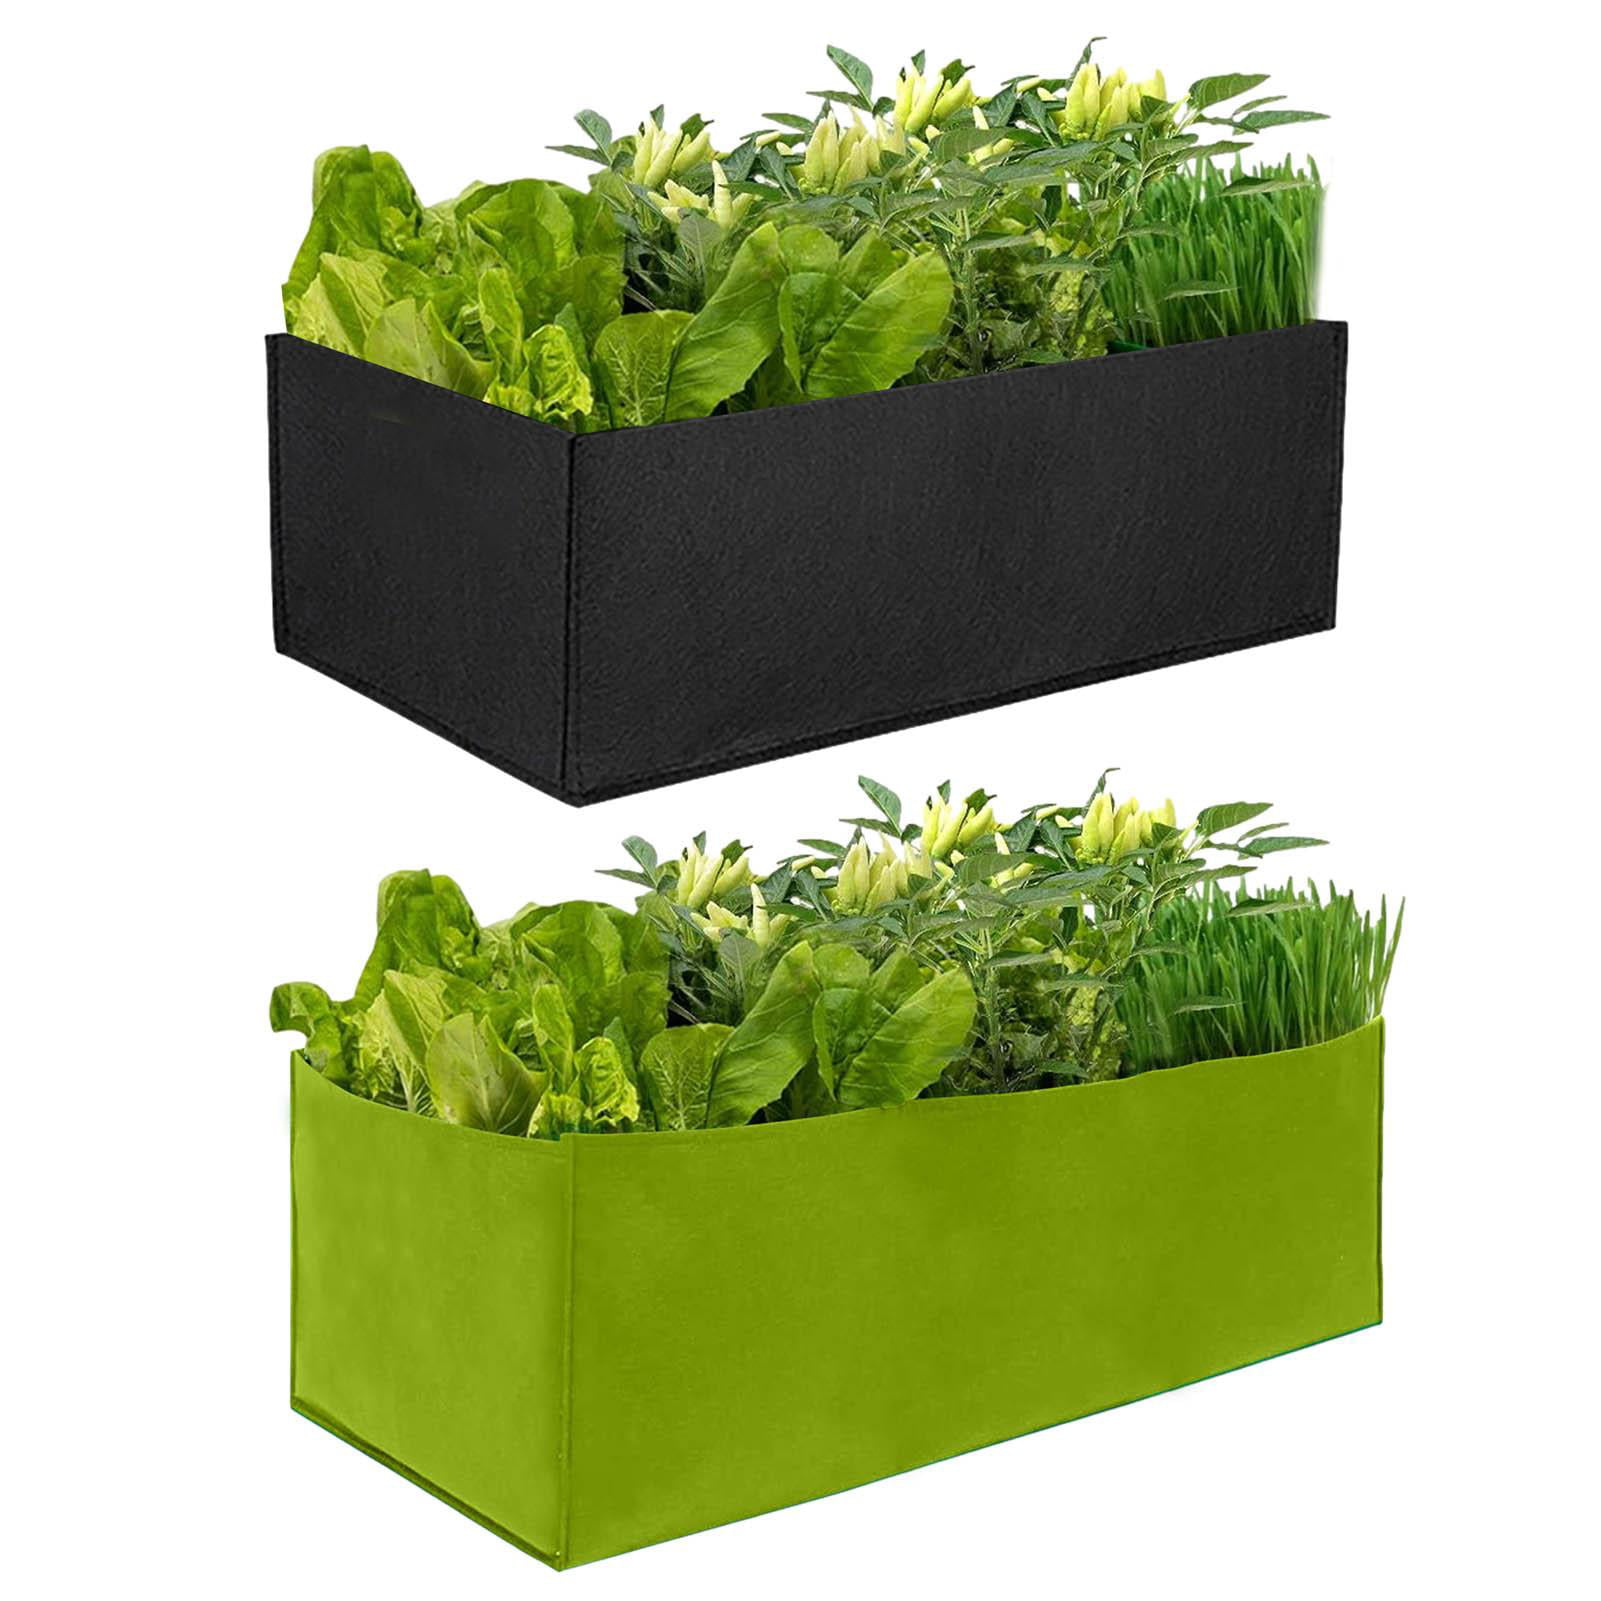 Vegetable Plant Flower Gardening Rectangle Grow Bag Vegetable Planter Container 